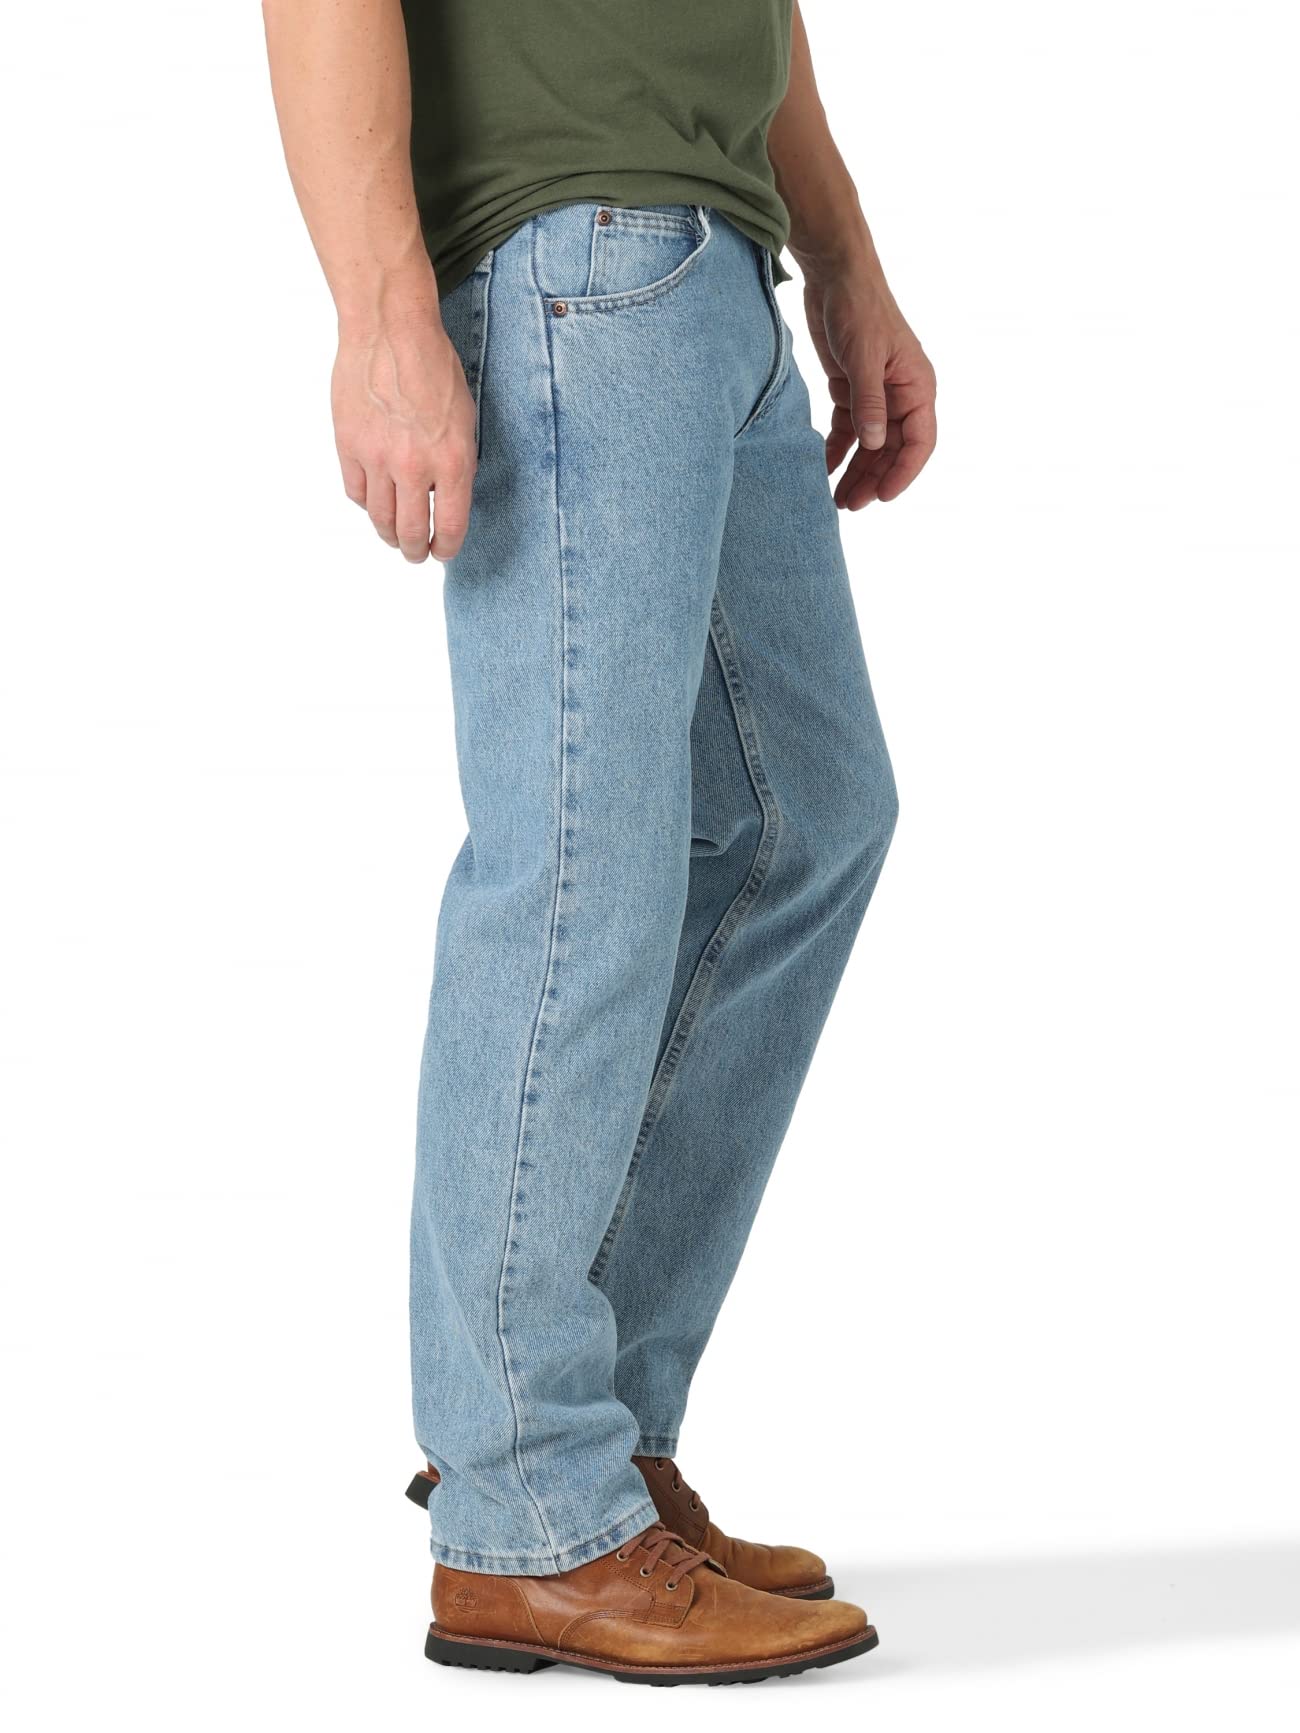 Wrangler Authentics Men's Classic 5-Pocket Regular Fit Cotton Jean, Light Stonewash, 36W x 29L